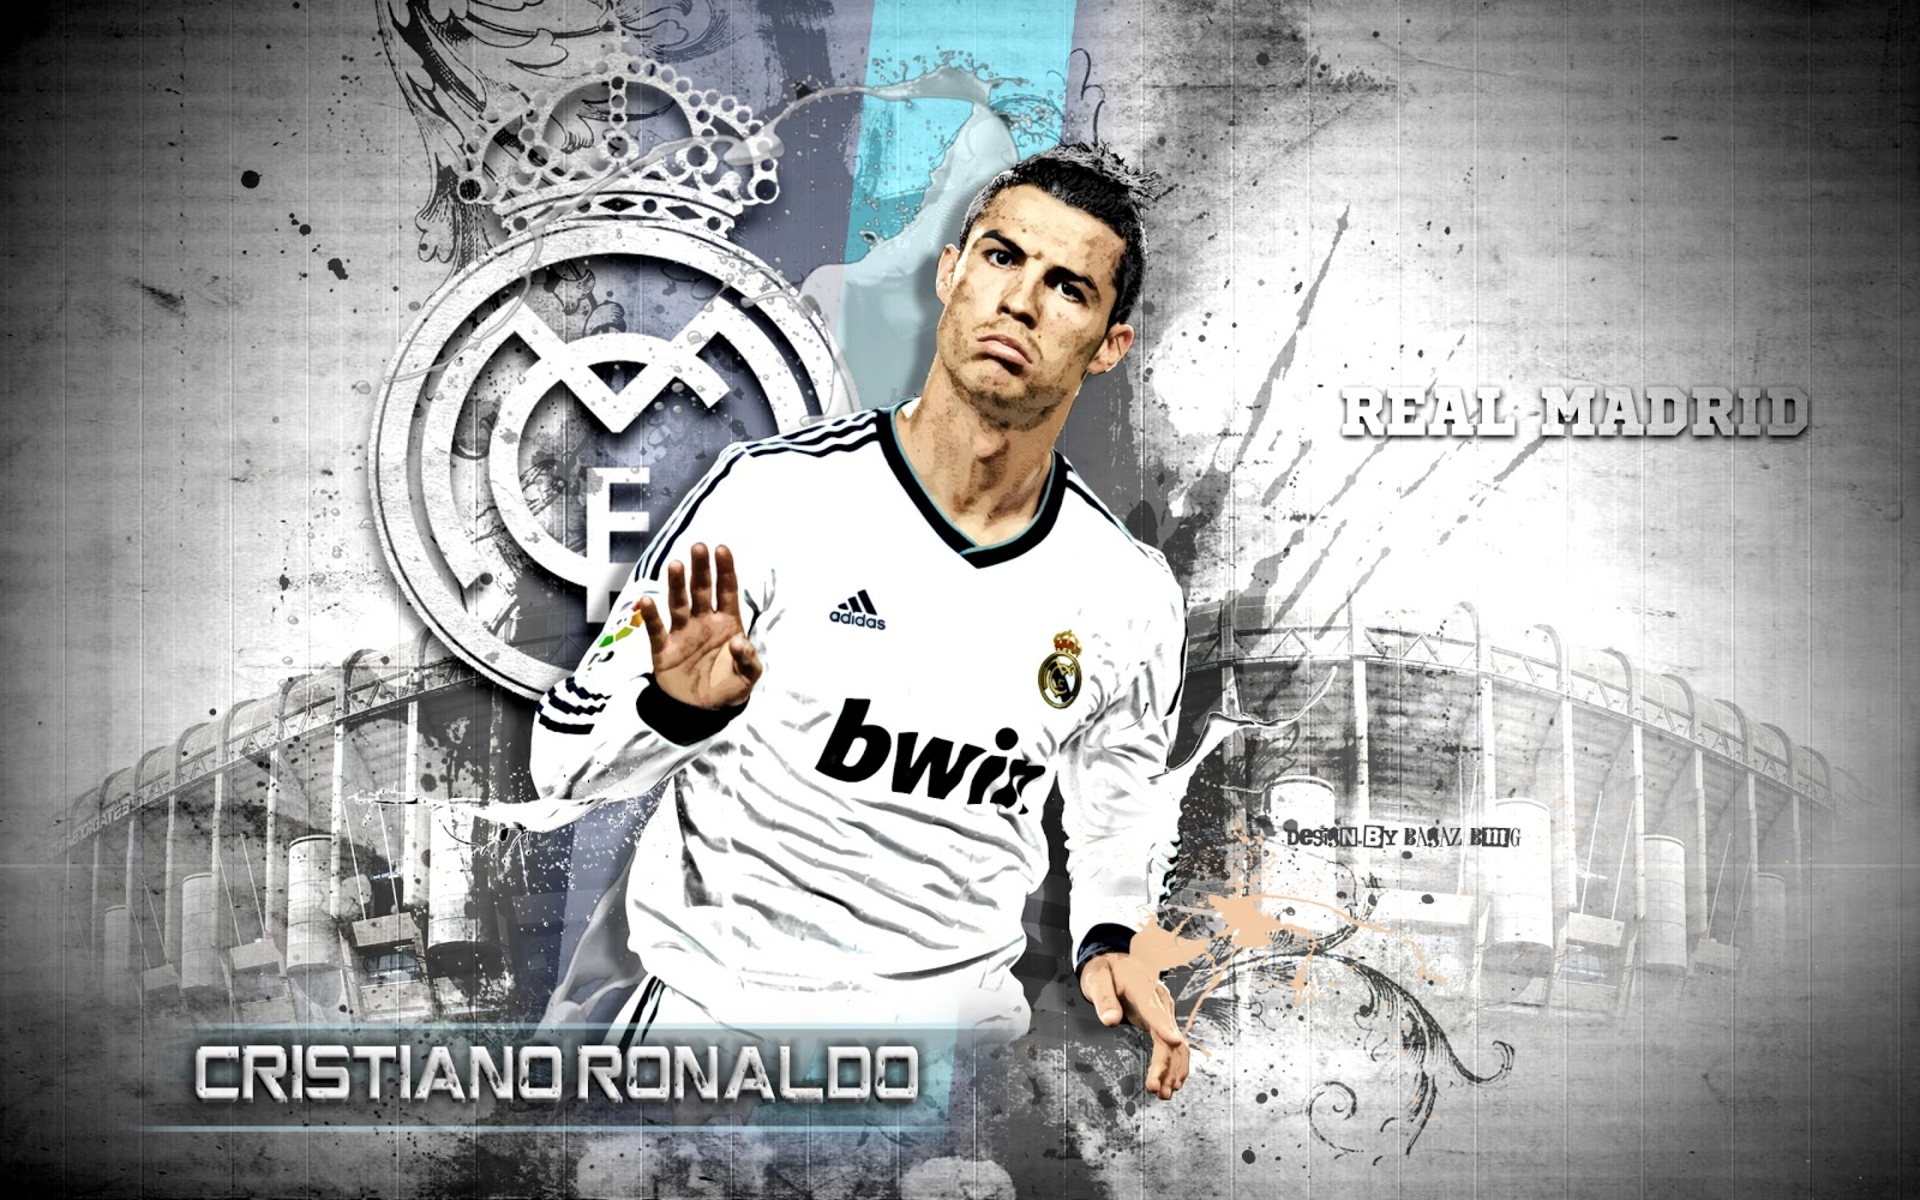 Cool Cristiano Ronaldo Portugal And Real Madrid Wallpaper Pics